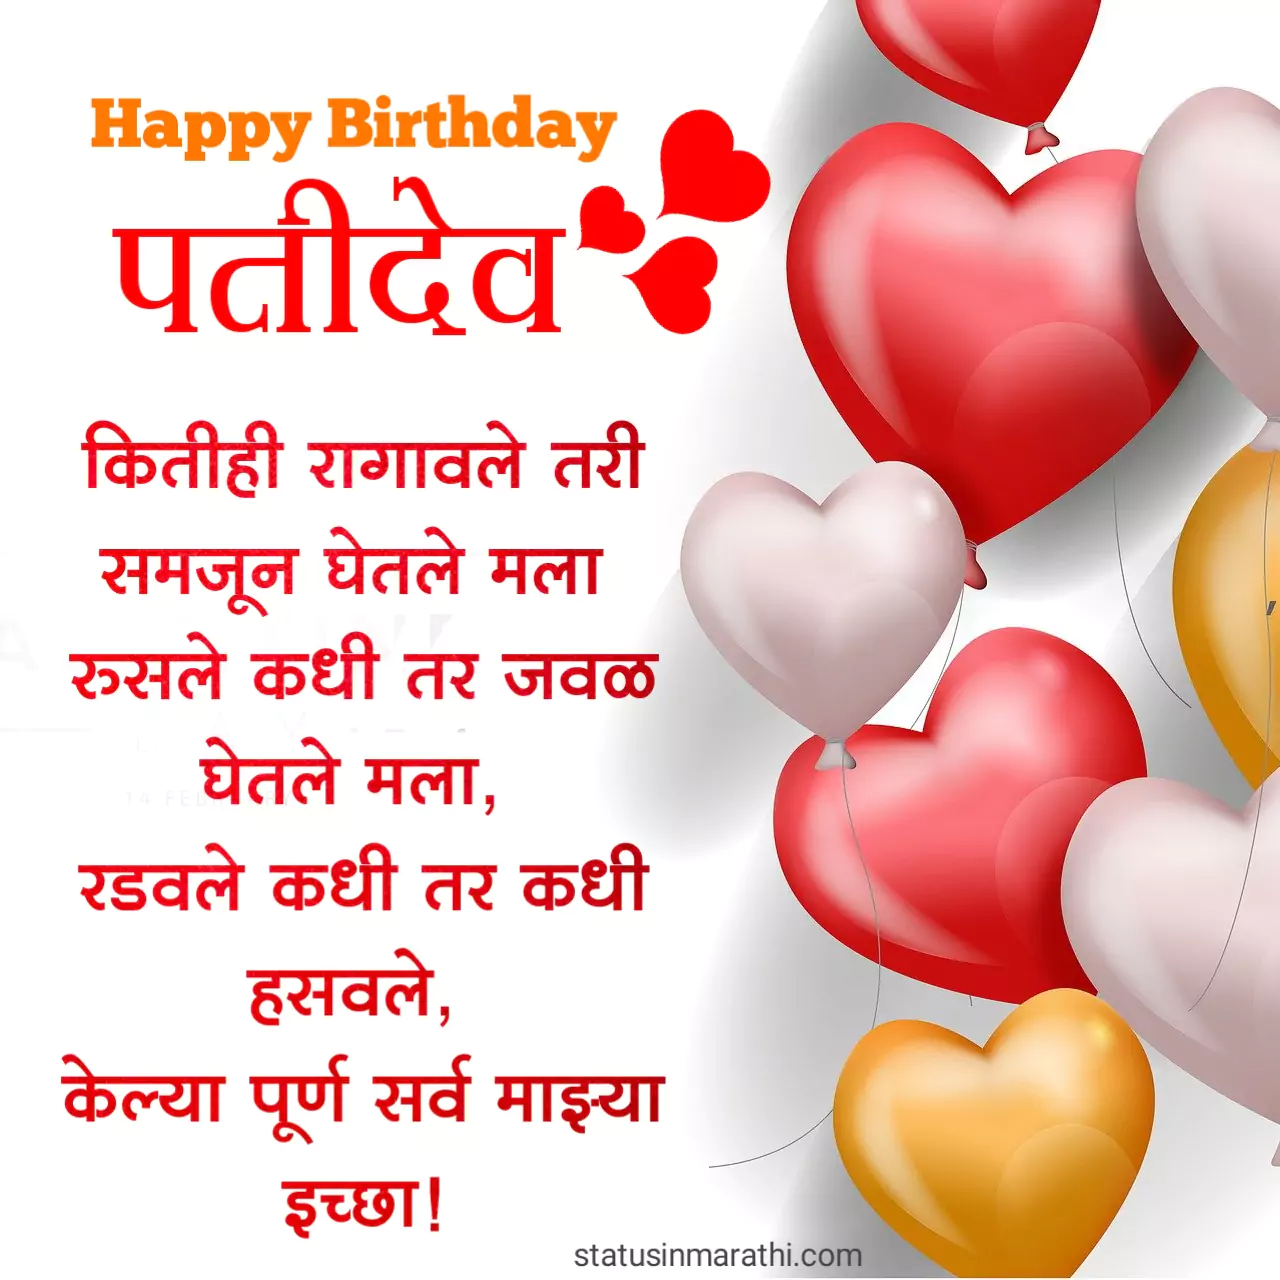 Happy Birthday wishes for husband in marathi 